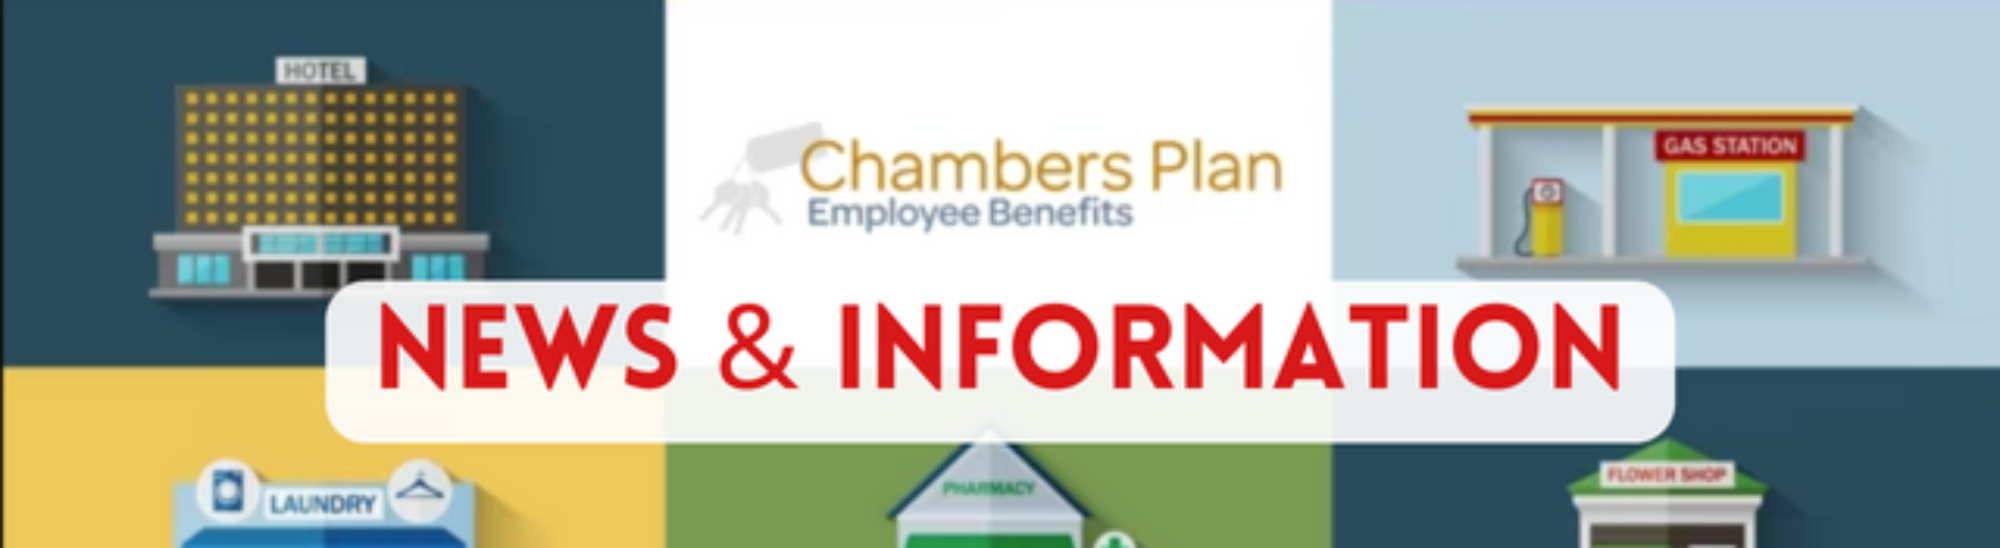 Chambers Plan News & Information